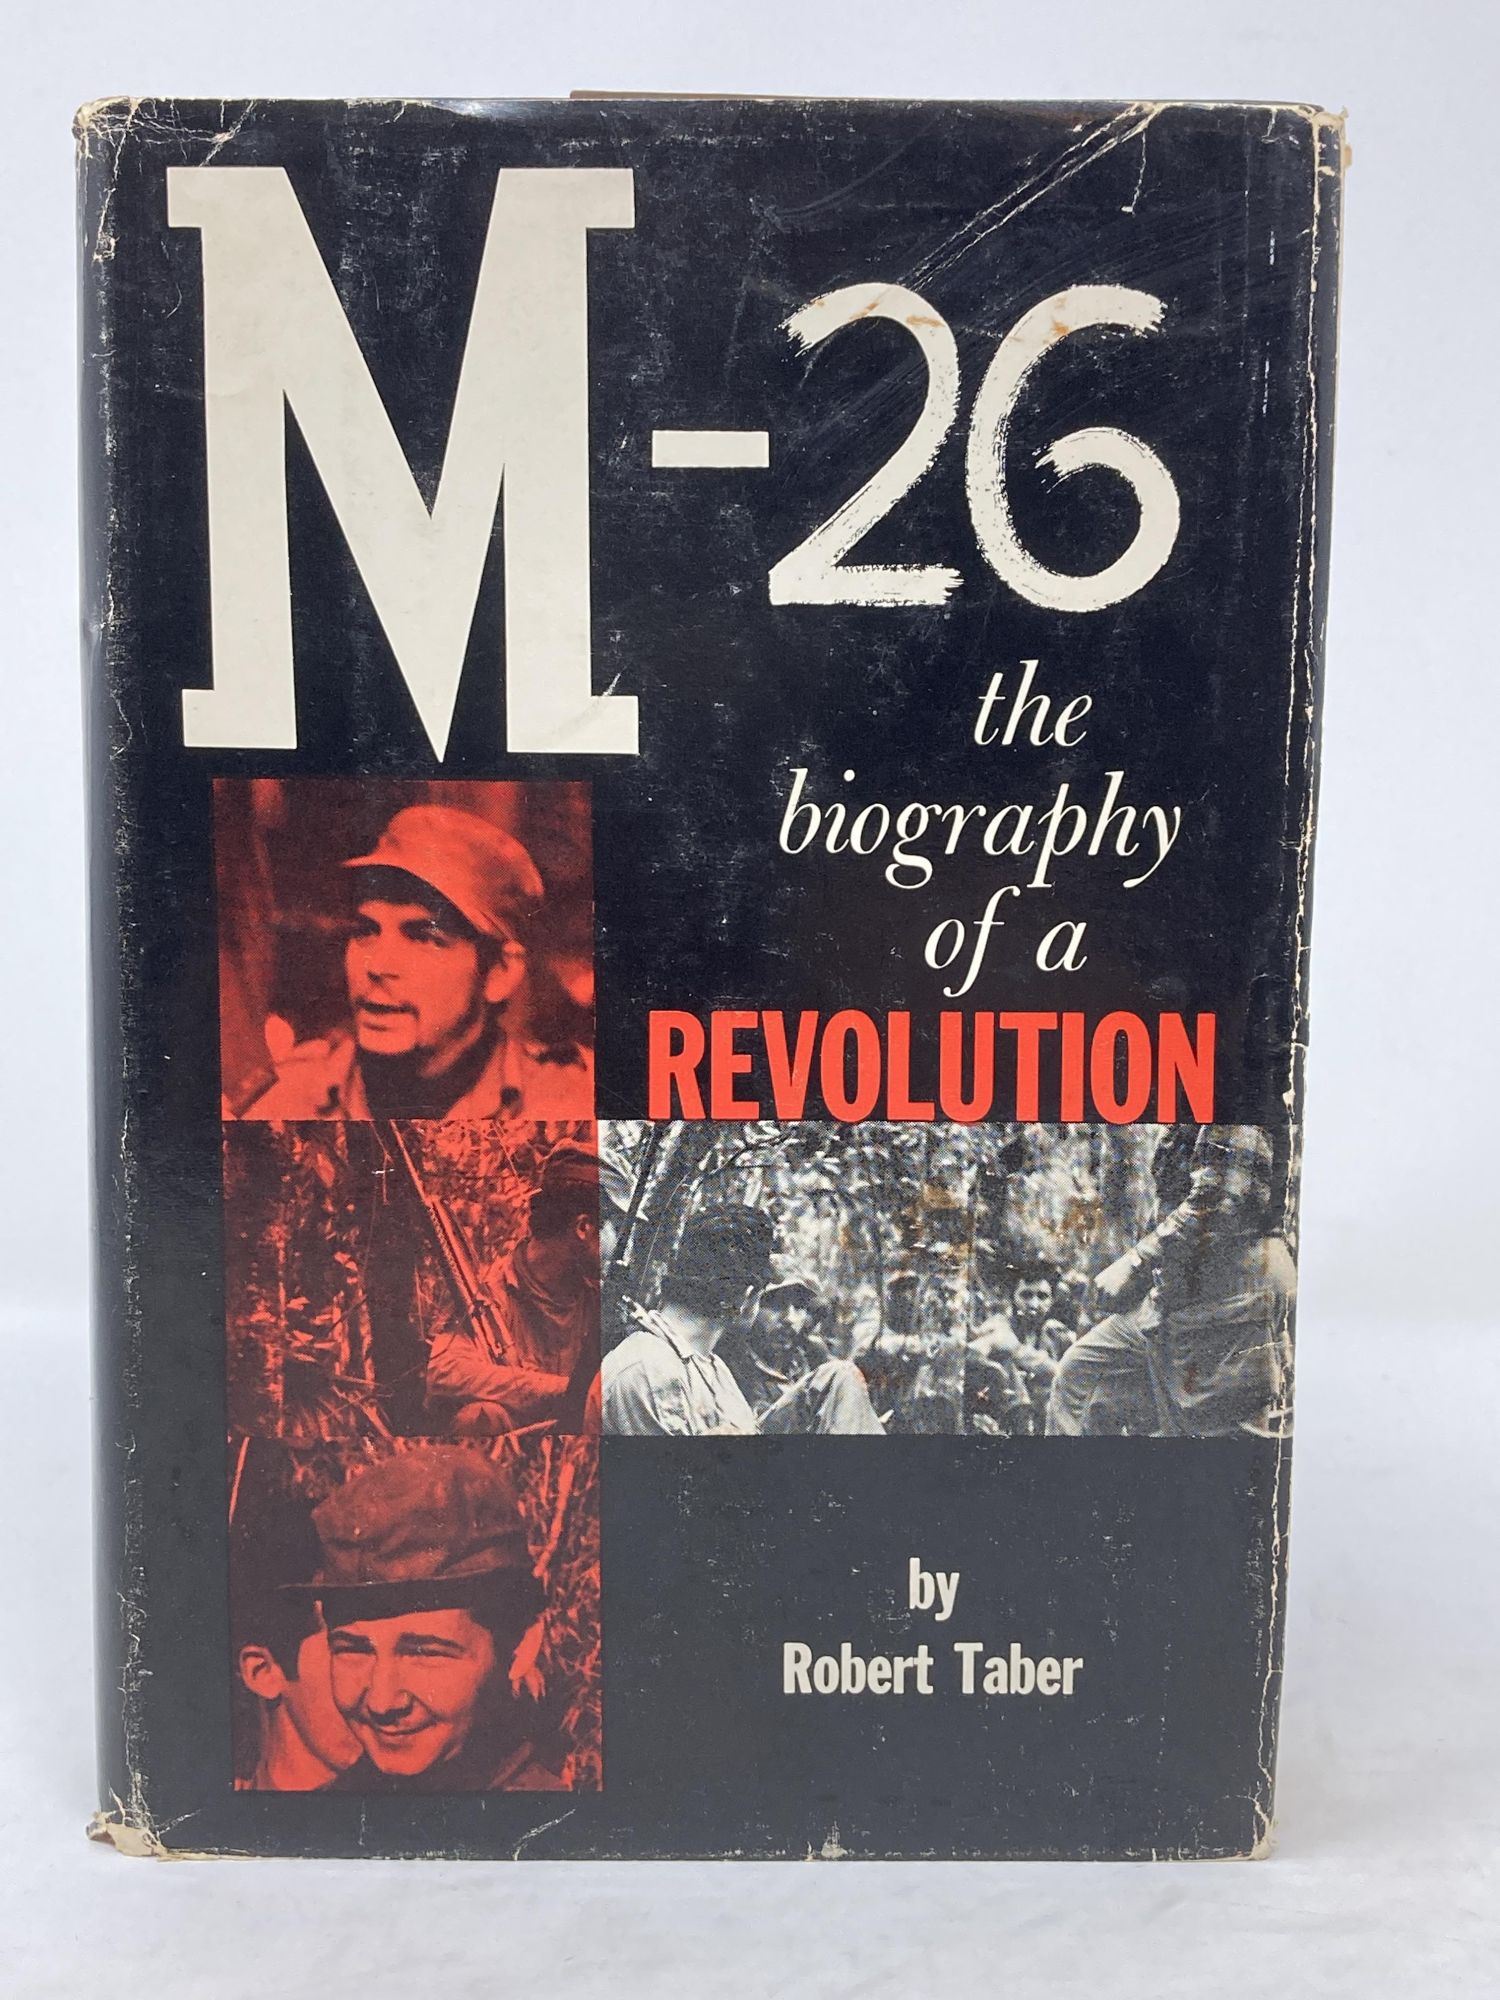 Taber, Robert - M-26, Biography of a Revolution